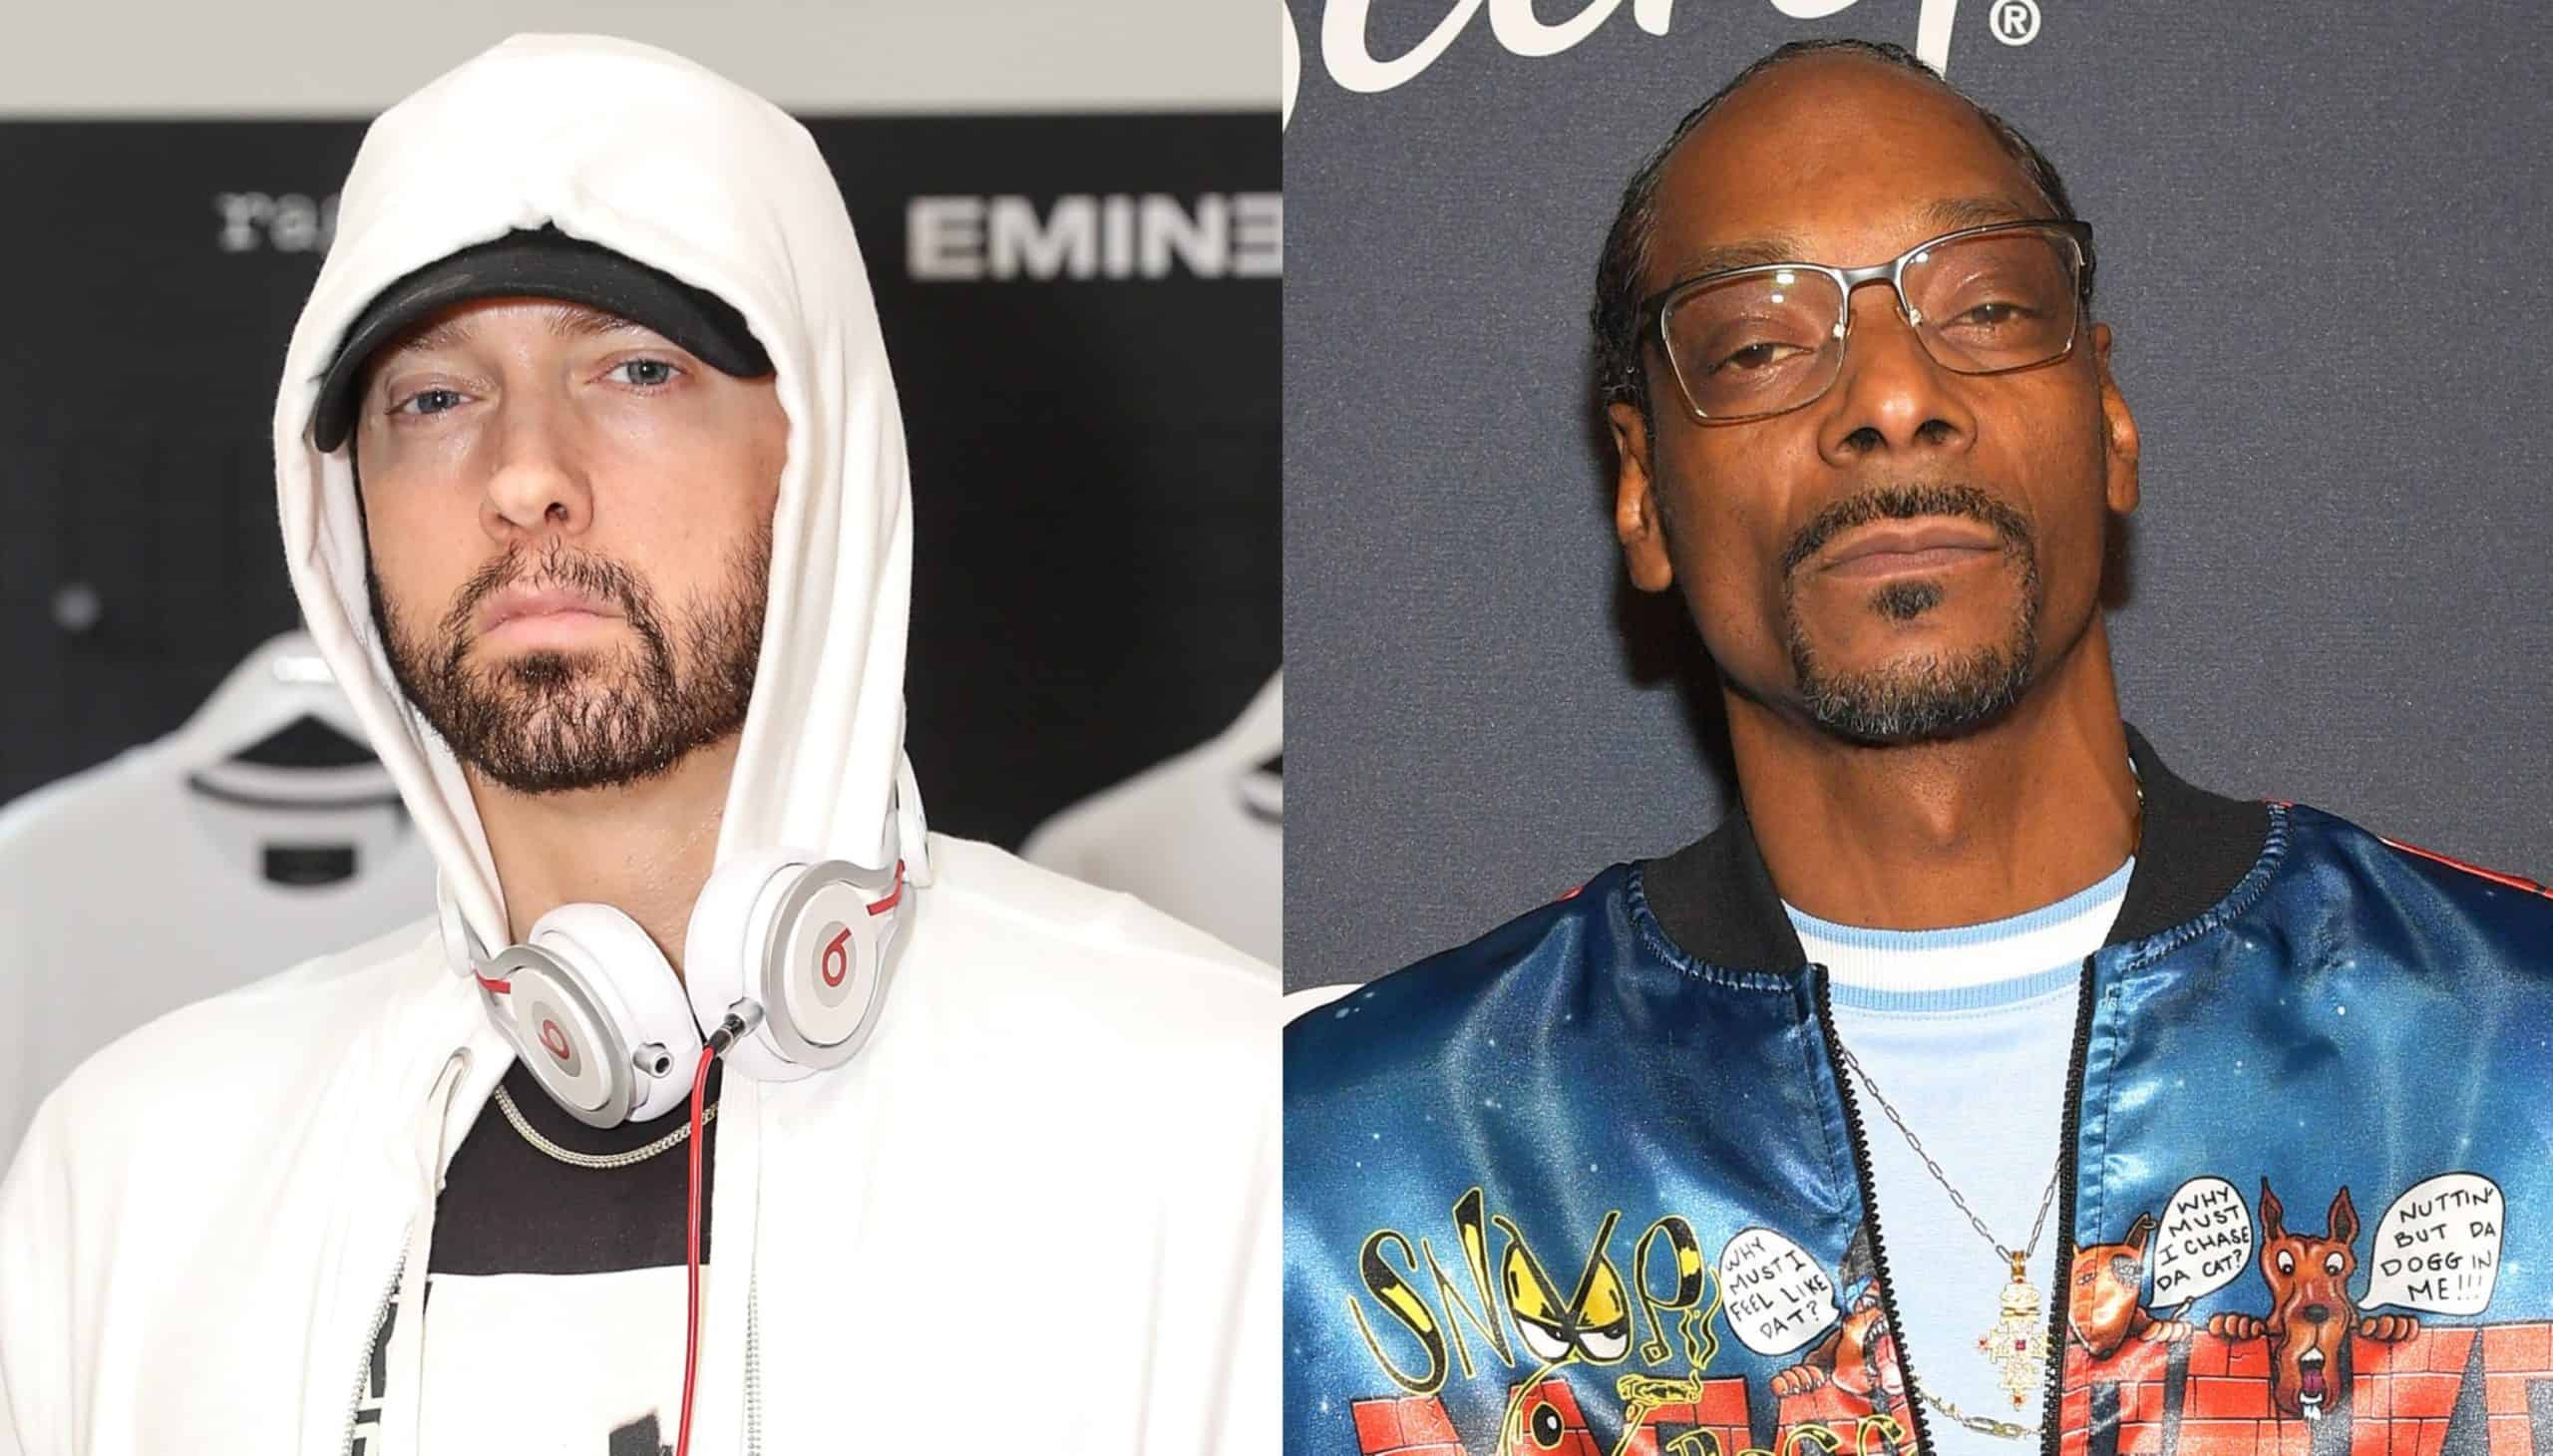 Snoop Dogg Fires Back At Eminem, Threatens to Diss Eminem